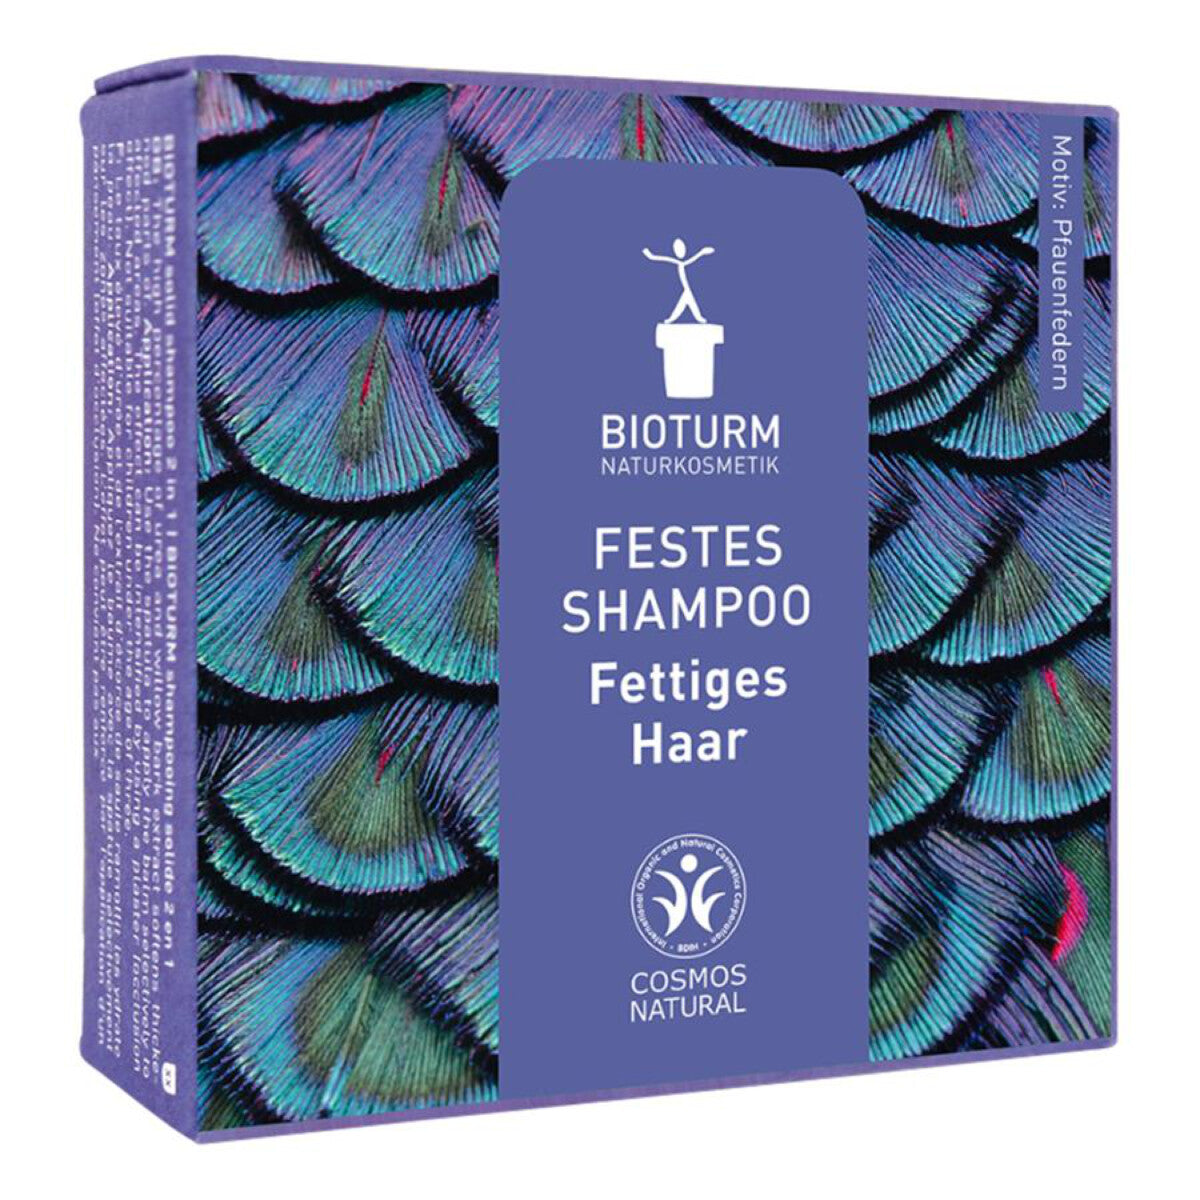 BIOTURM Festes Shampoo, fettiges Haar - 100 g